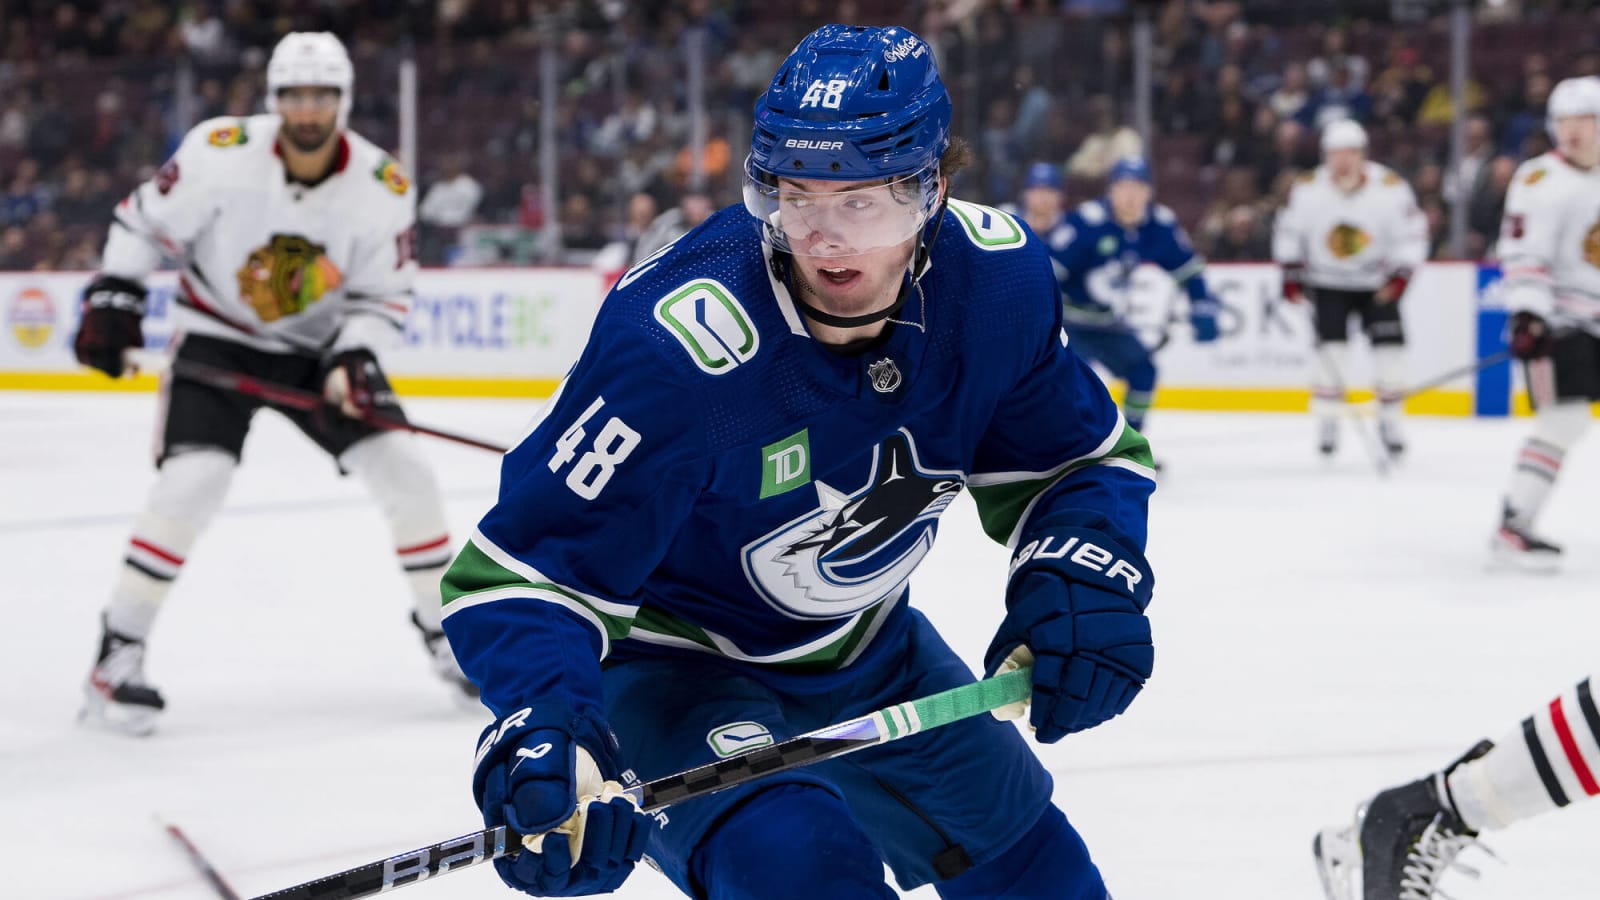 Woo, McWard, Johansson: Which Canucks RHD prospect plays the most NHL games next season?